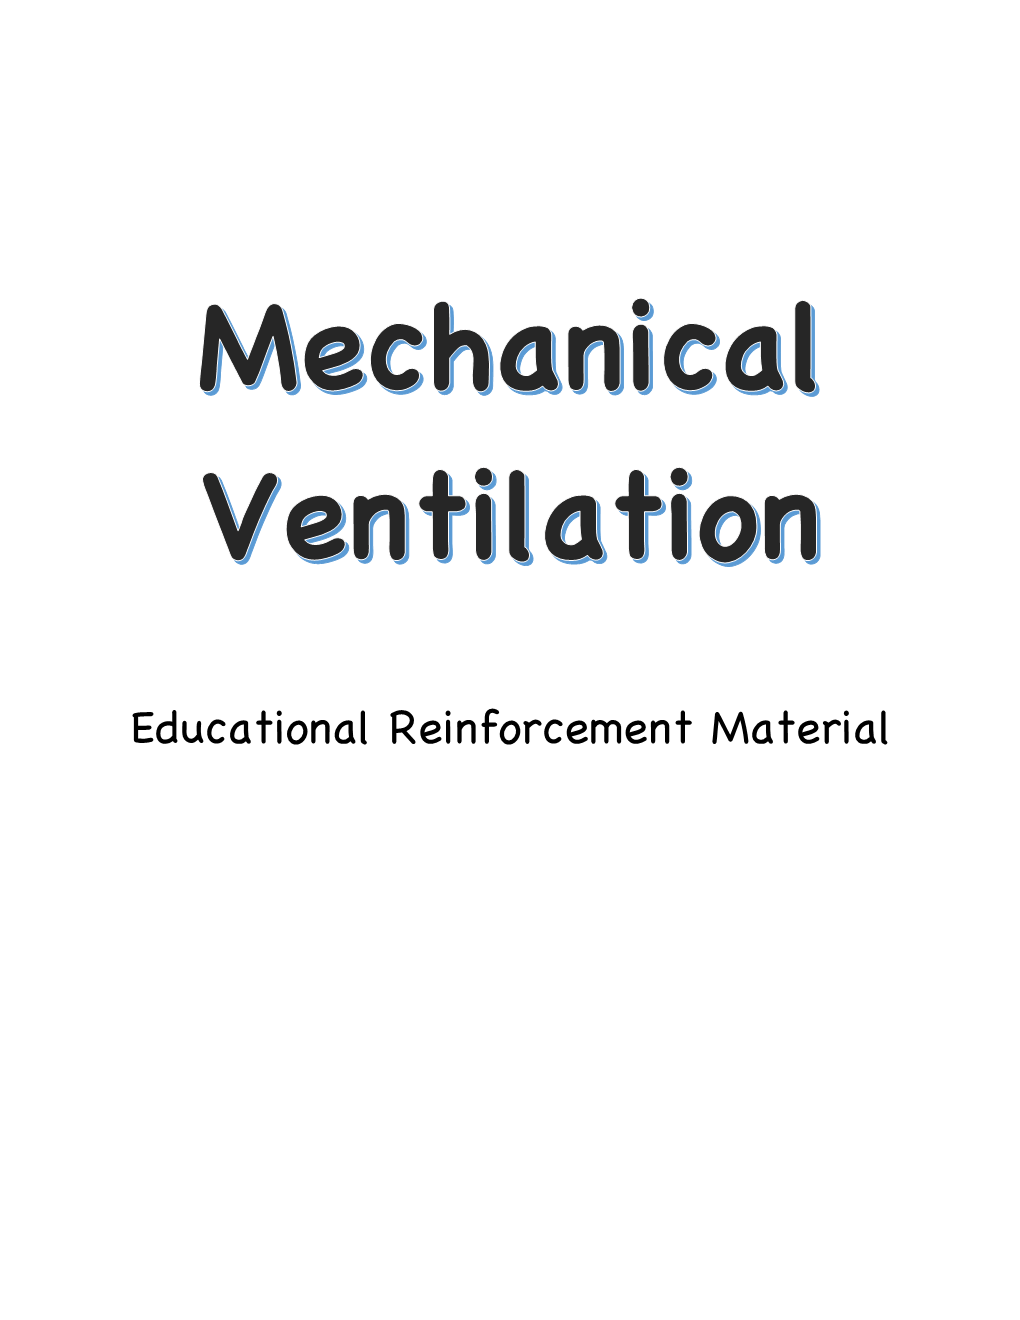 Mechanical Ventilation – Educational Reinforcement Material